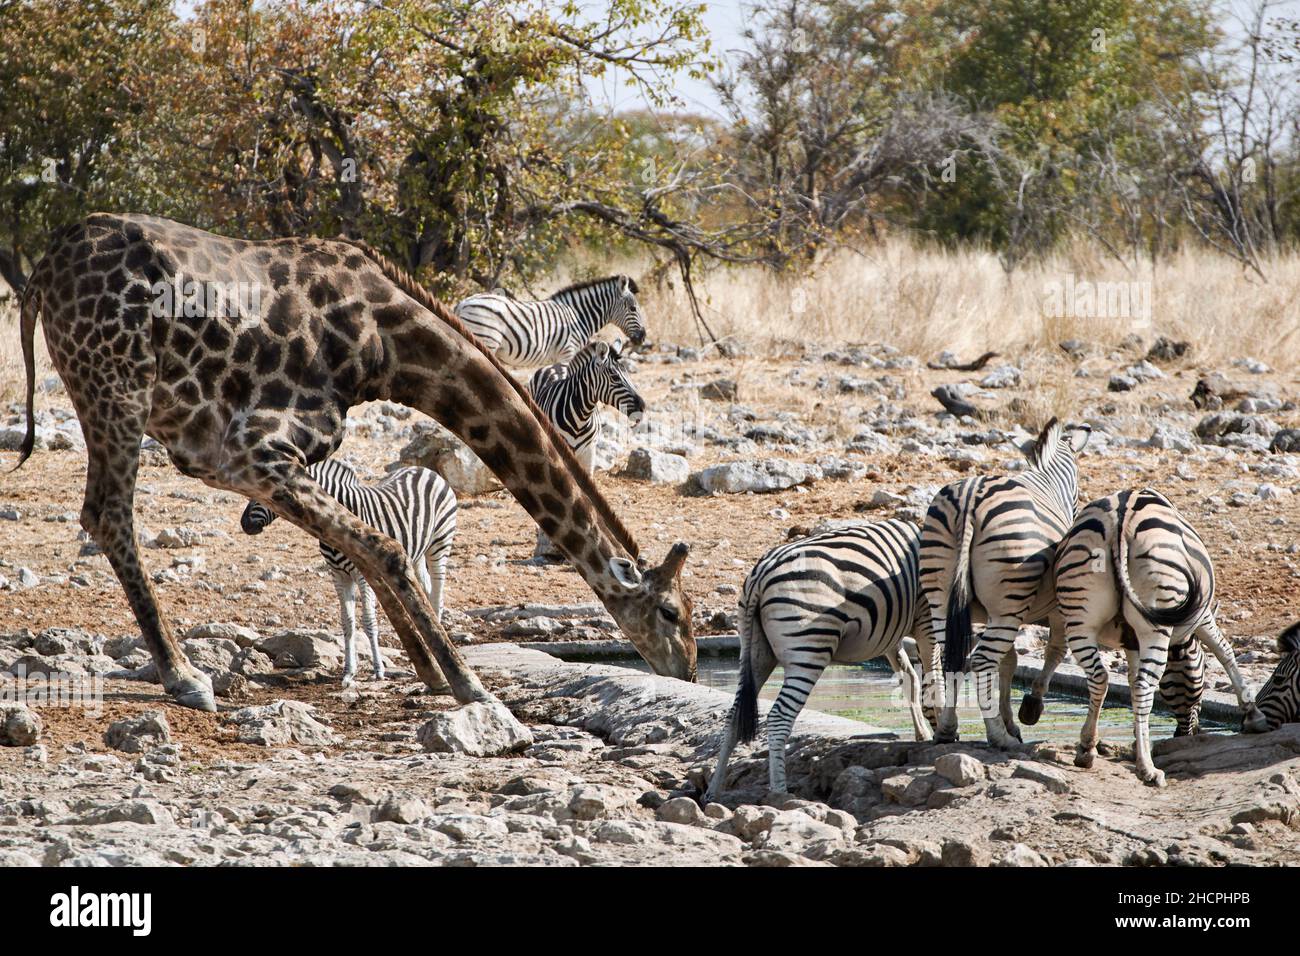 Giraffe and Plains Zebras drinking water at artificial waterhole in Namibian savannah Stock Photo